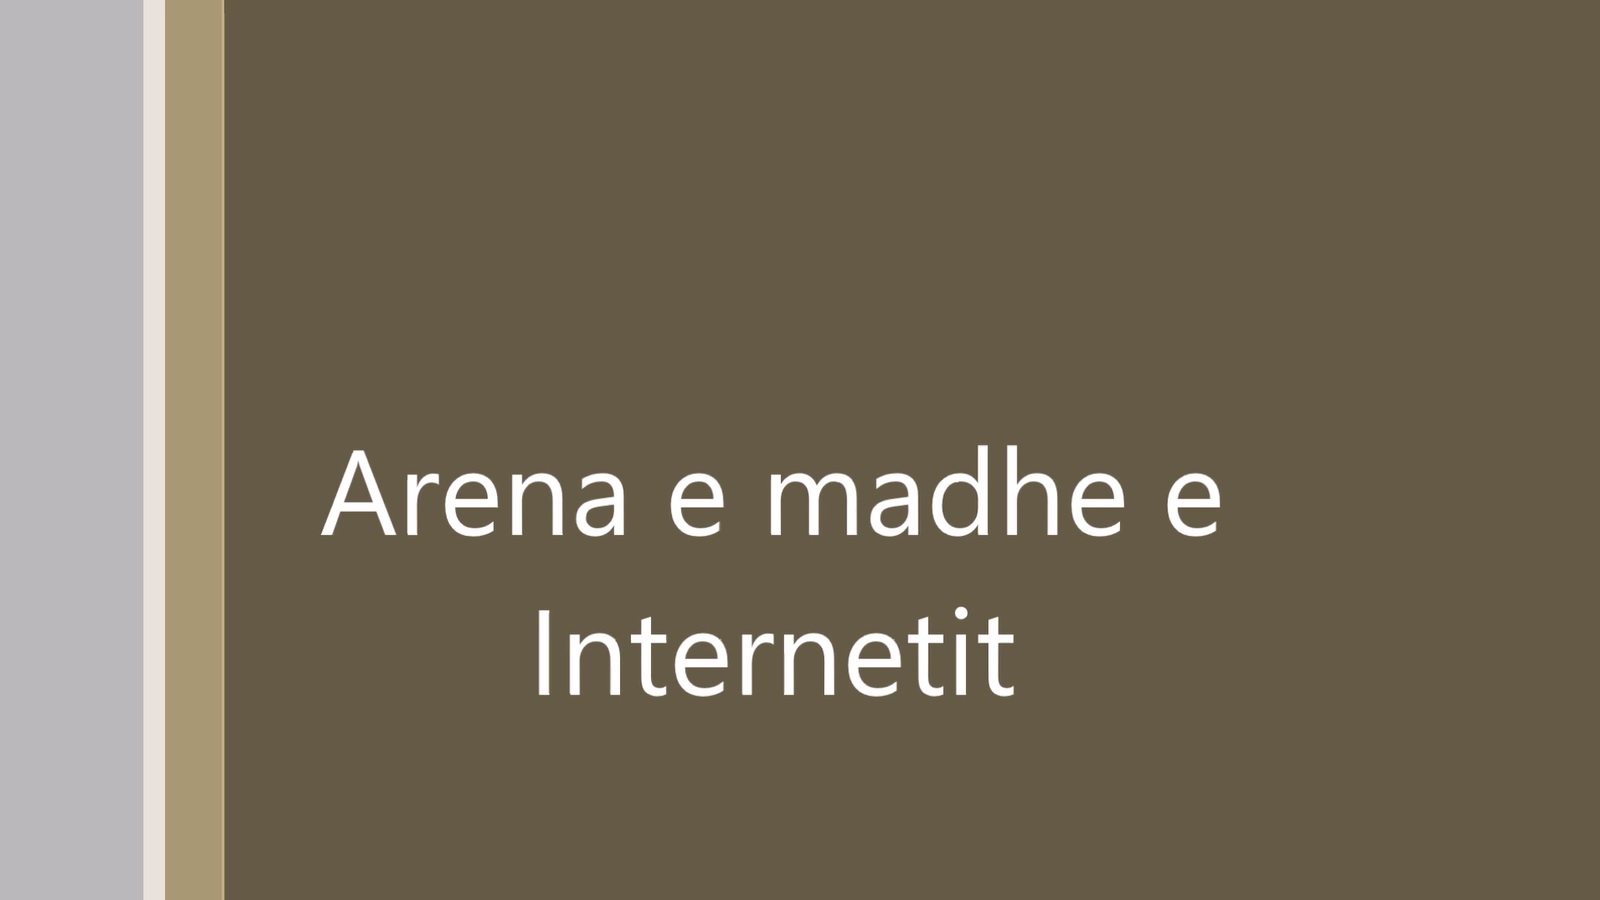 Arena e Internetit